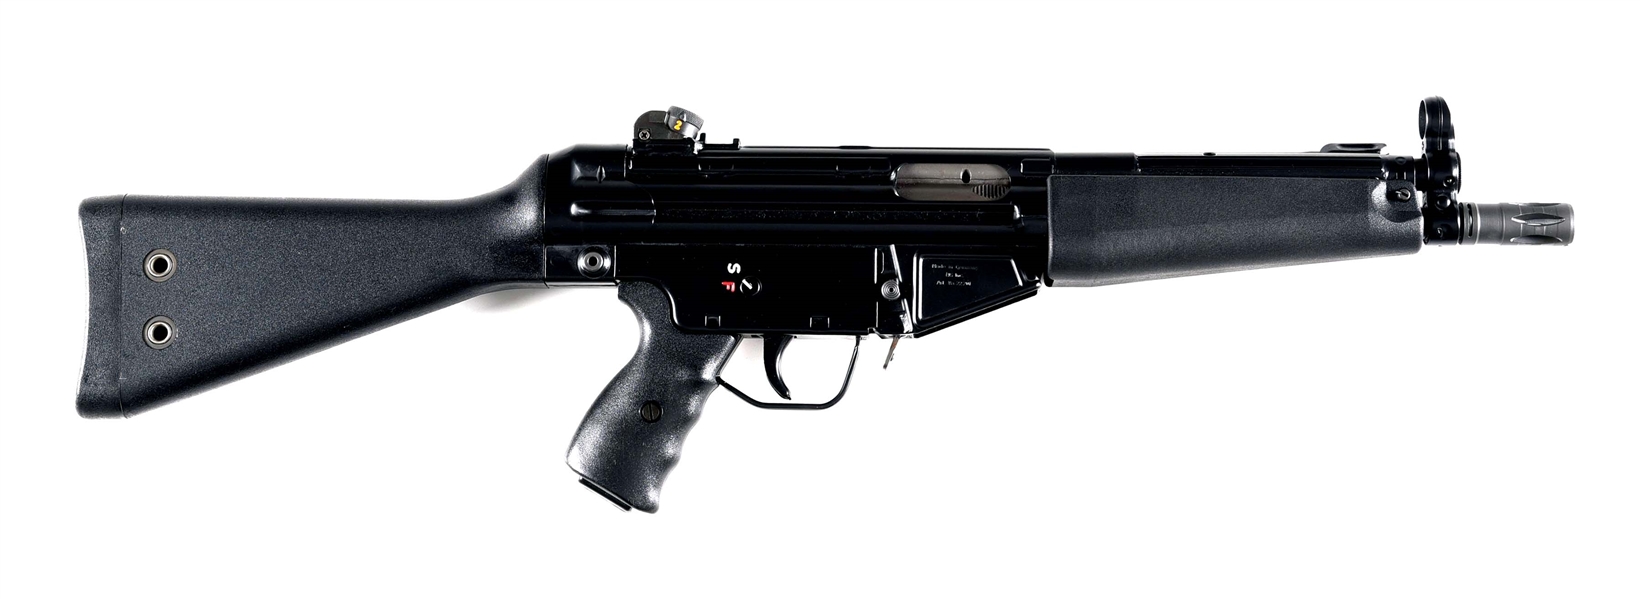 (N) T DYER GUNSMITH & MACHINE HK MODEL 53 SEMI-AUTOMATIC SHORT BARREL RIFLE (1981) (SHORT BARREL RIFLE).